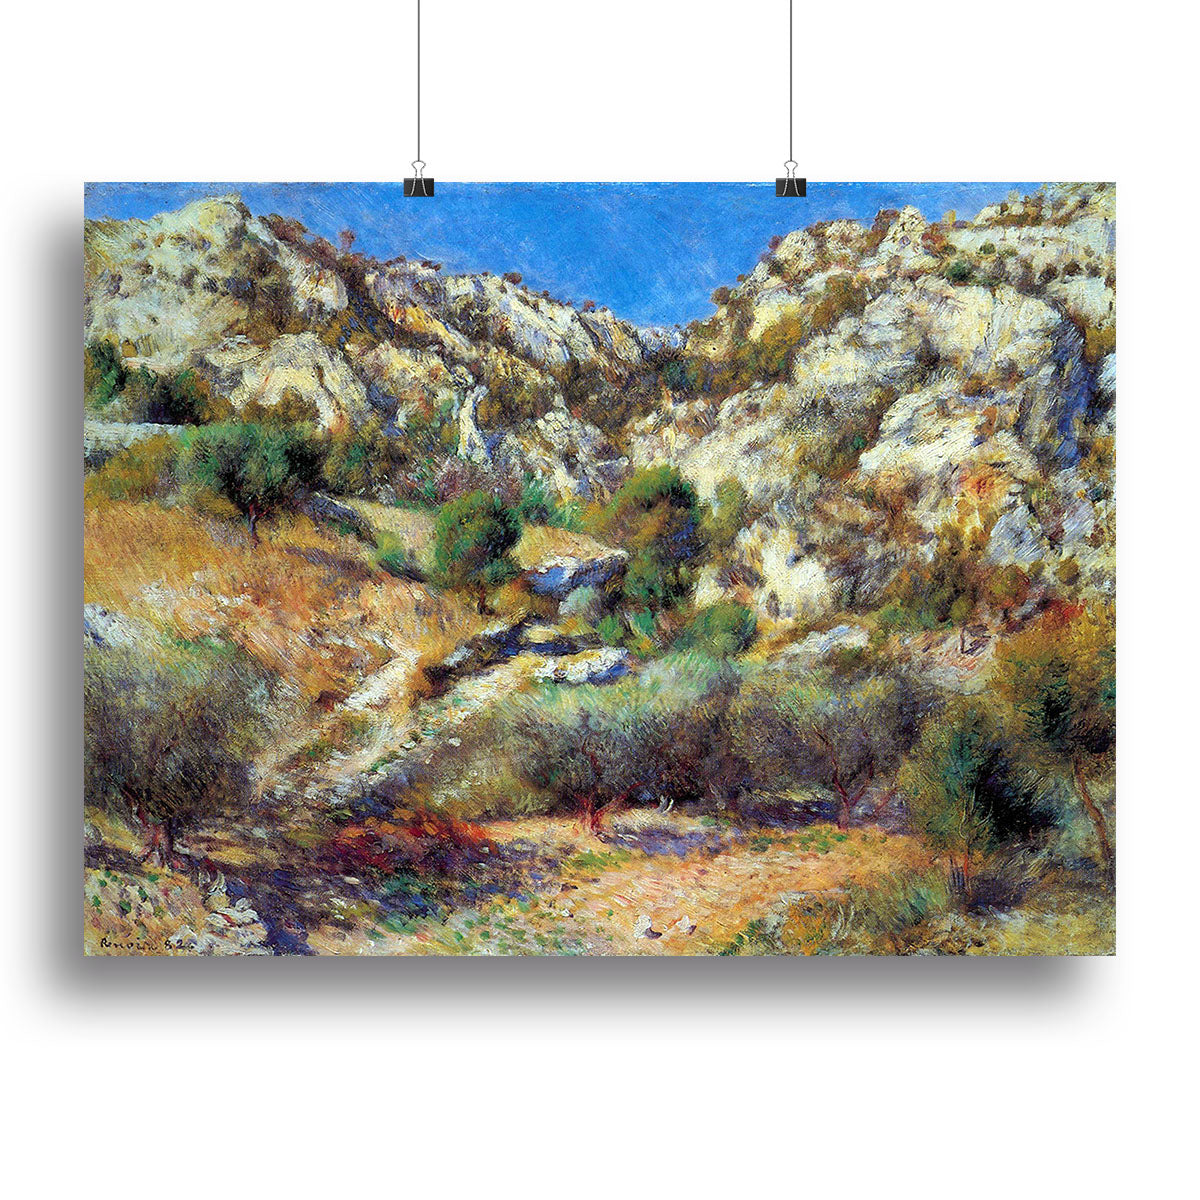 Rocks at LEstage by Renoir Canvas Print or Poster - Canvas Art Rocks - 2